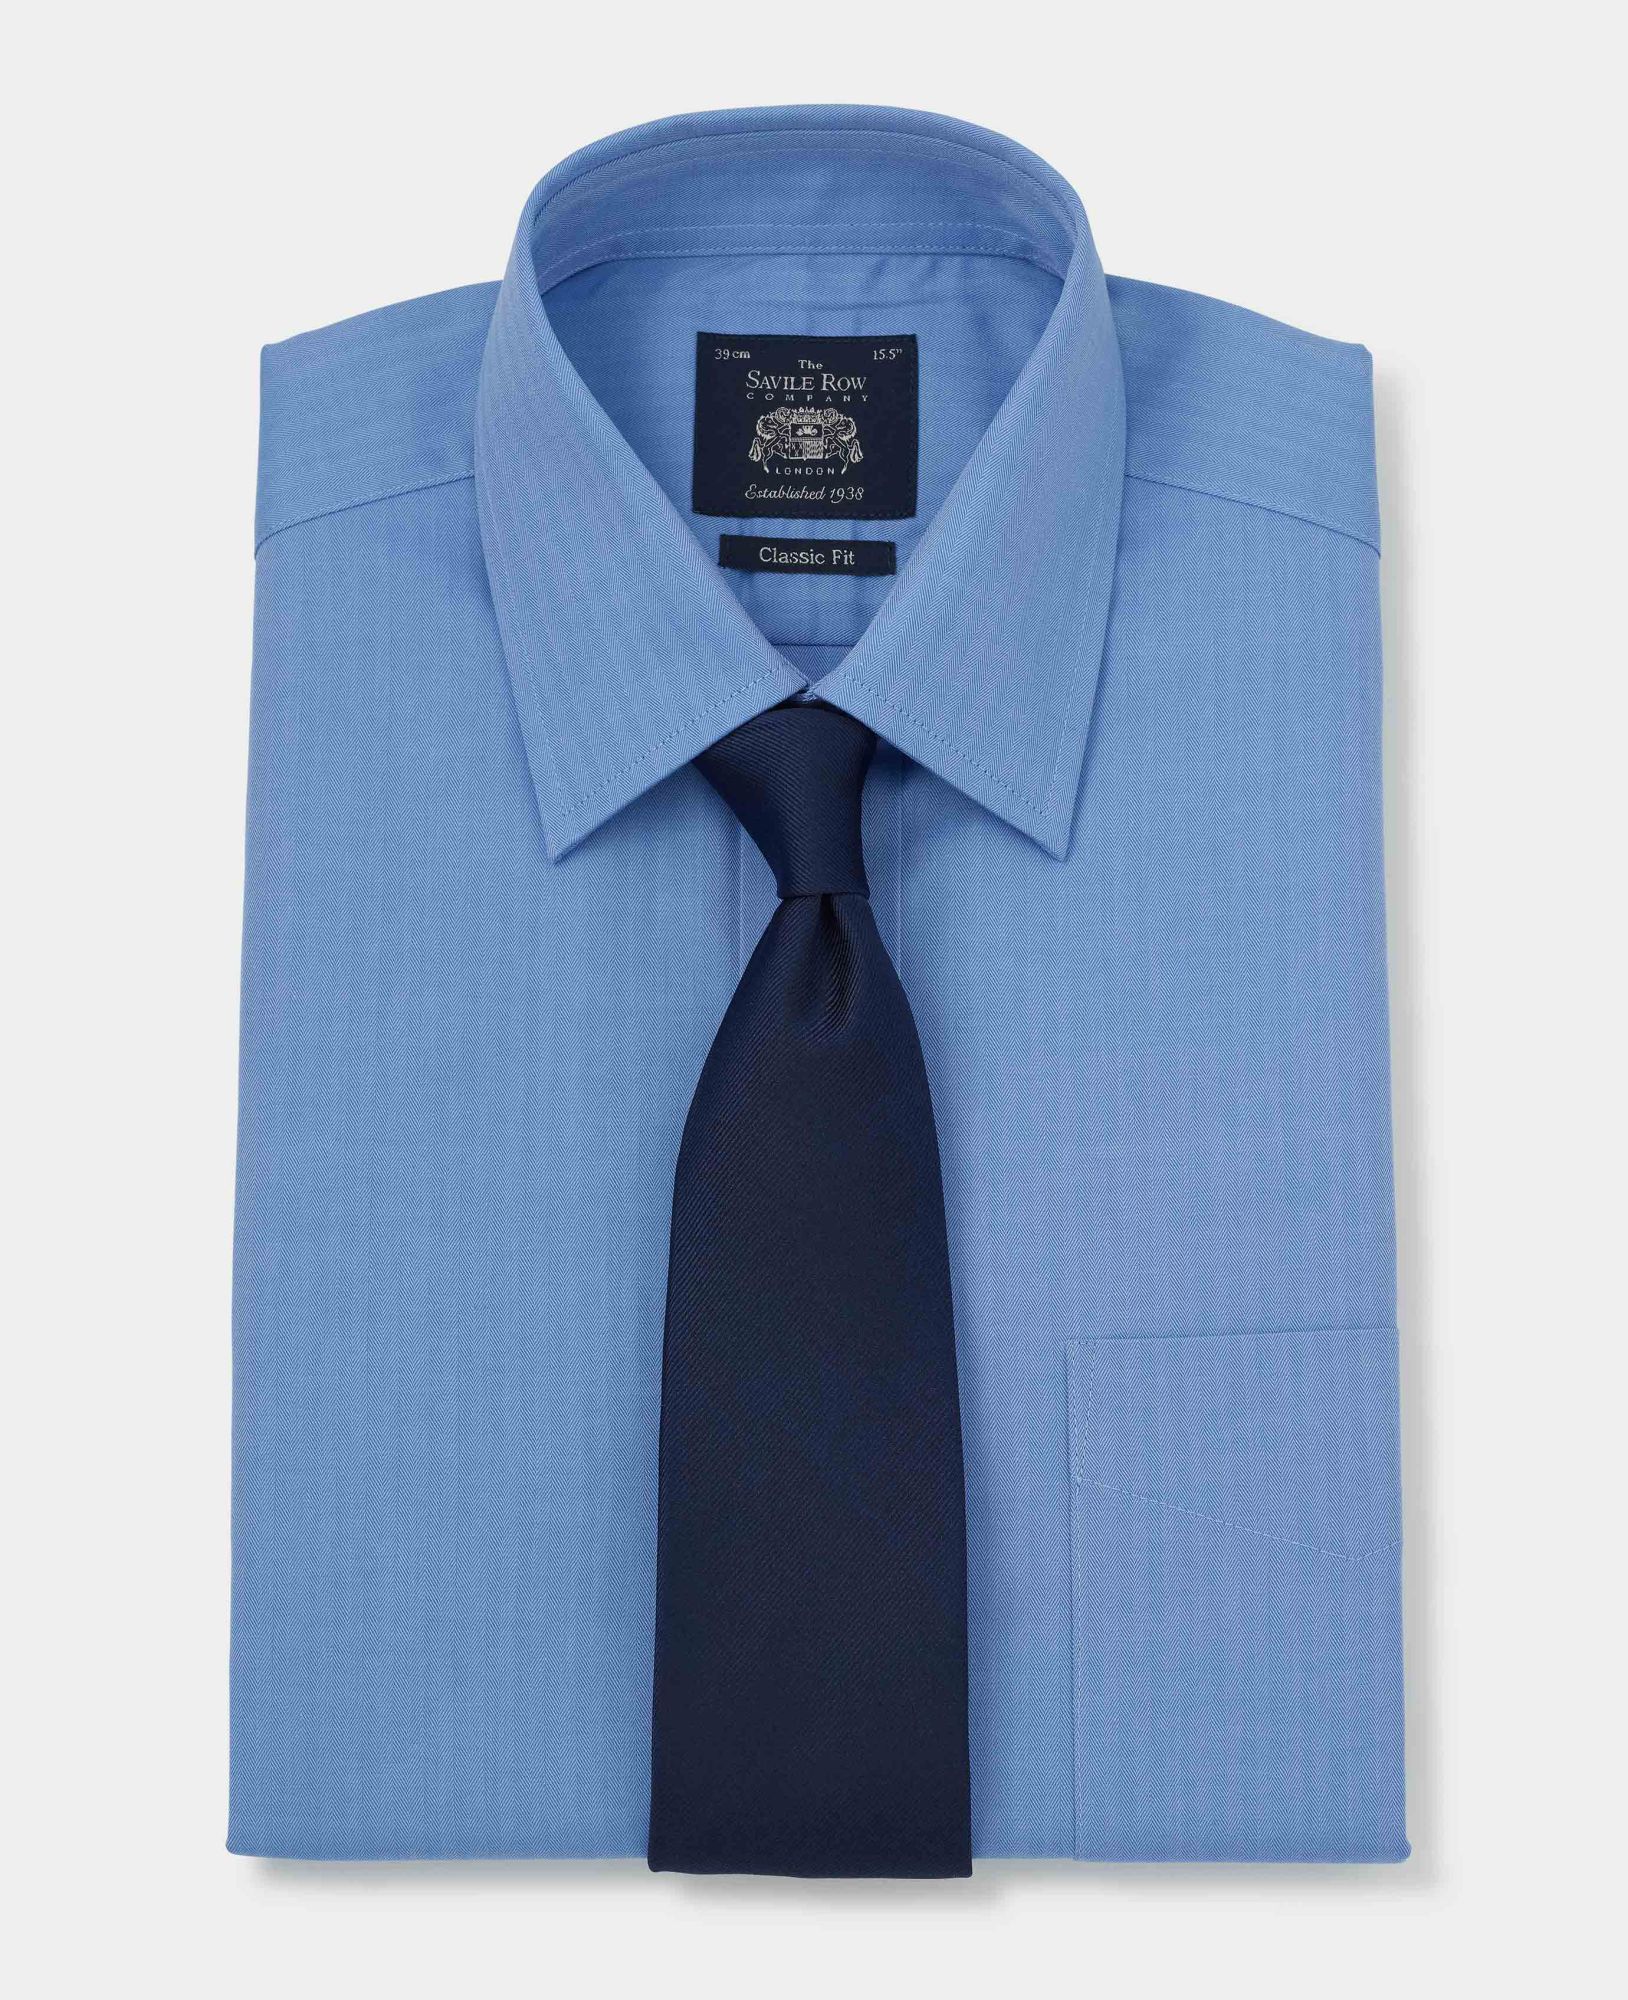 Mid Blue Herringbone Classic Fit Shirt - Double Cuff 17